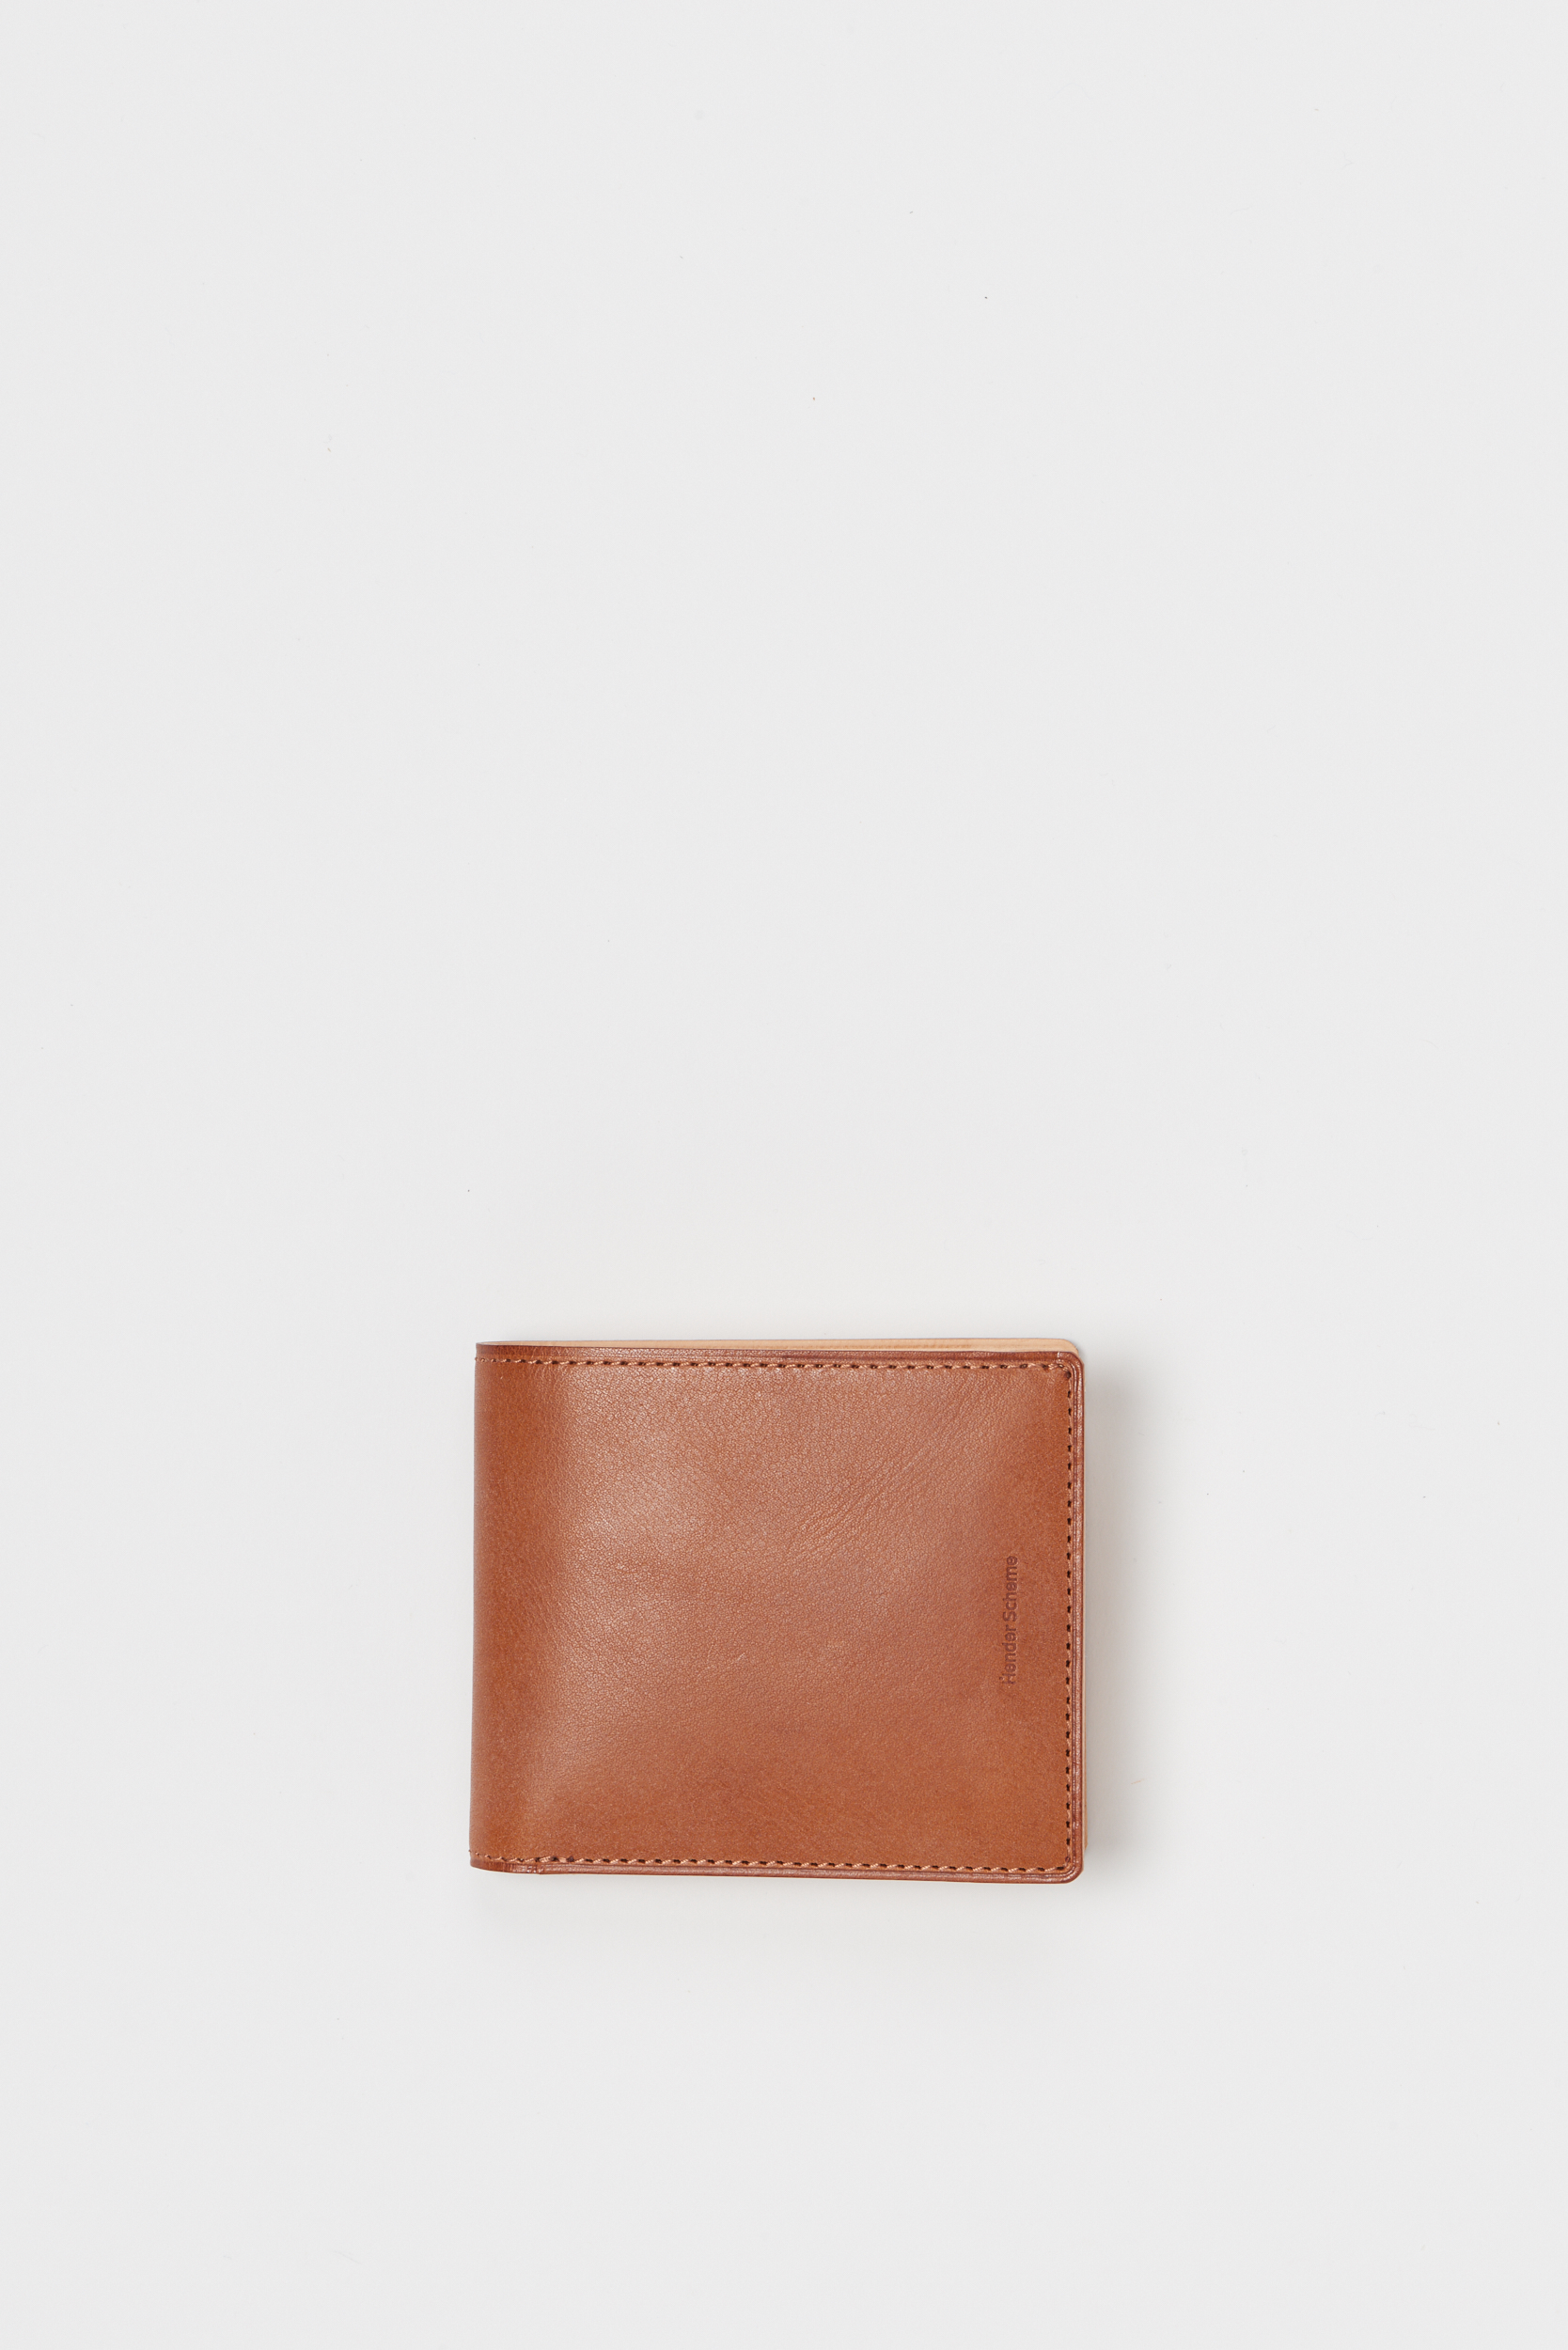 Hender Scheme エンダースキーマ 財布 正規取扱店 公式通販 送料無料 half folded wallet